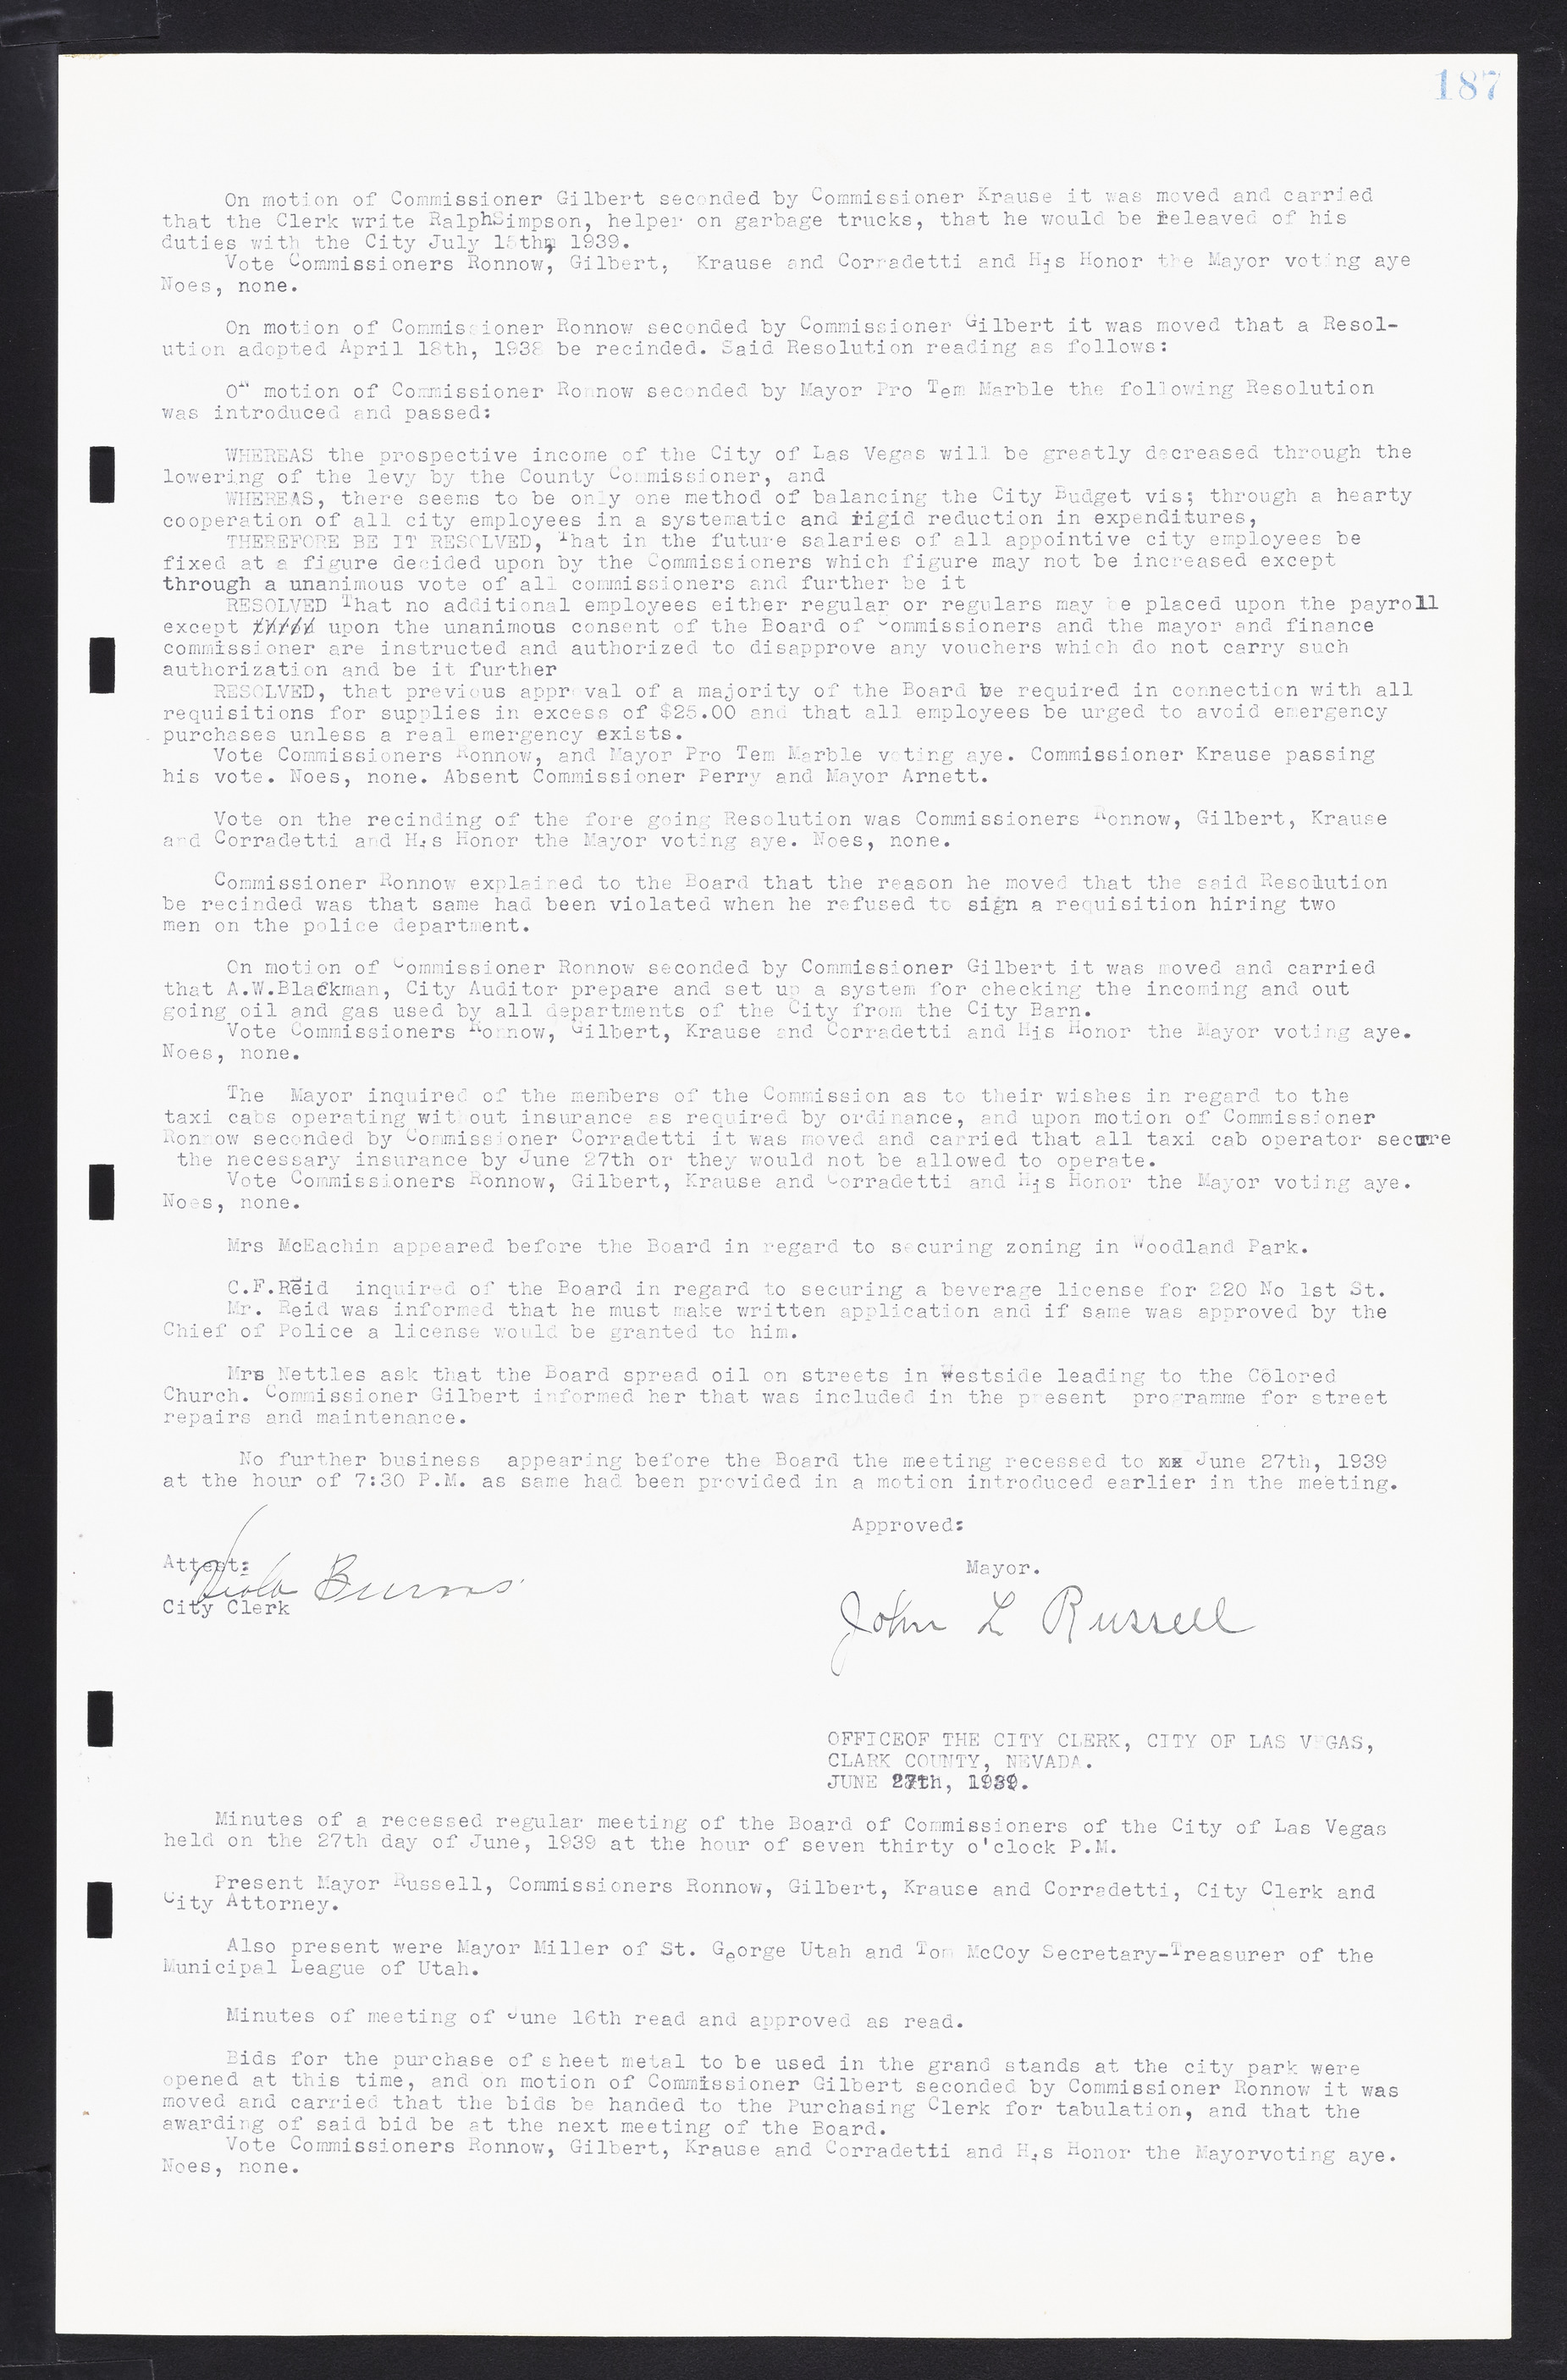 Las Vegas City Commission Minutes, February 17, 1937 to August 4, 1942, lvc000004-203